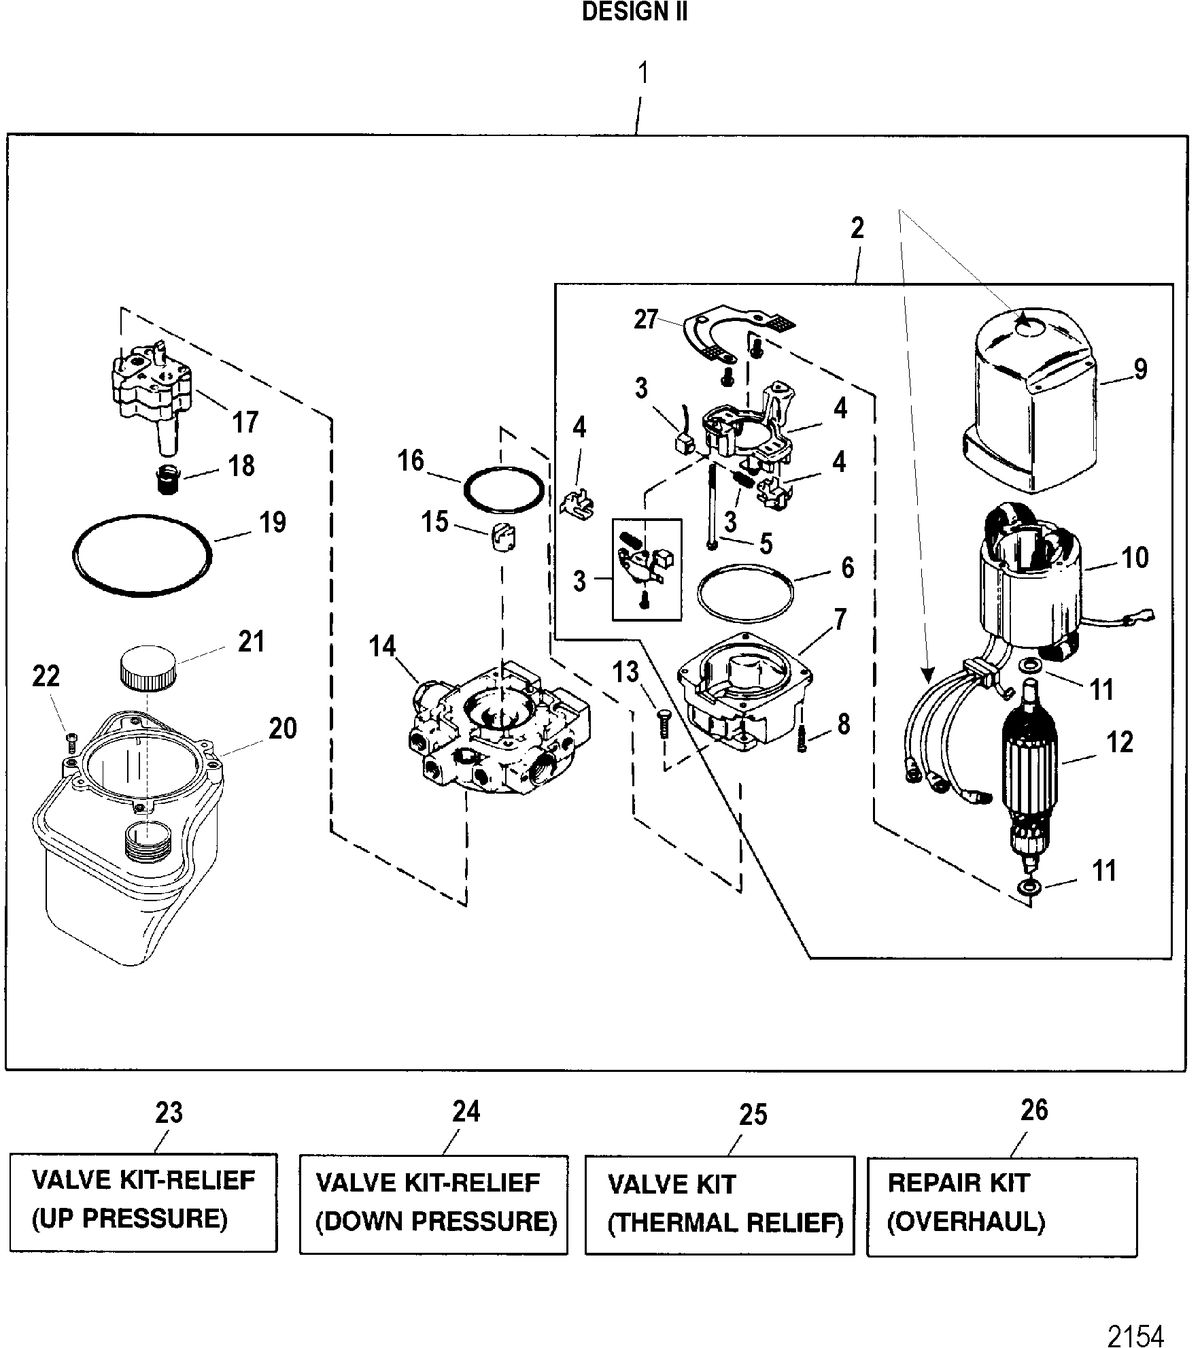 RACE STERNDRIVE 575 SCI Pump/Motor Assembly(Design II - 14336A25)